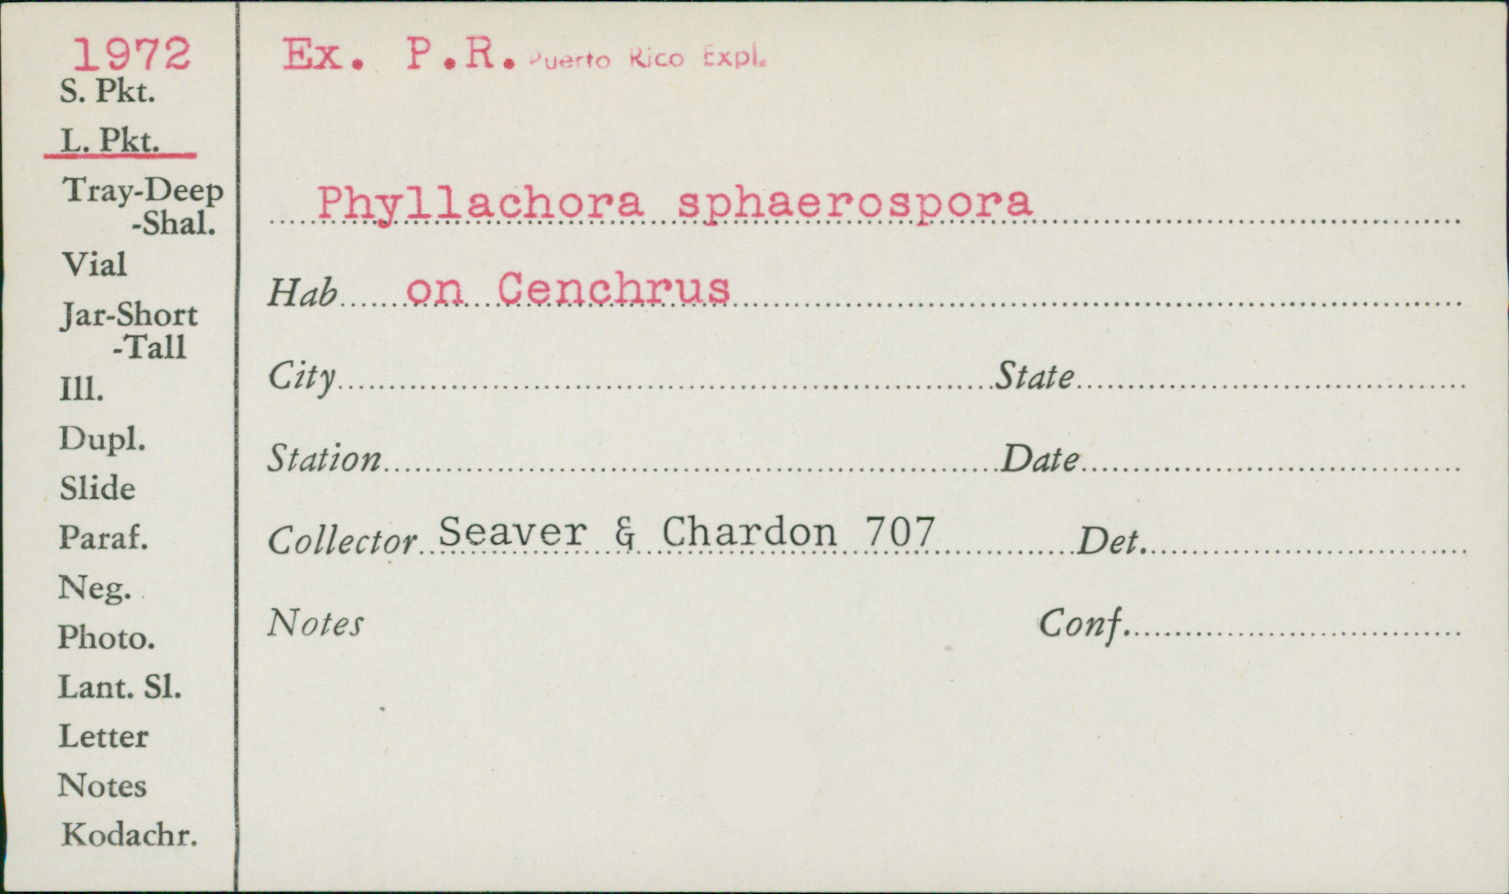 Phyllachora sphaerospora image